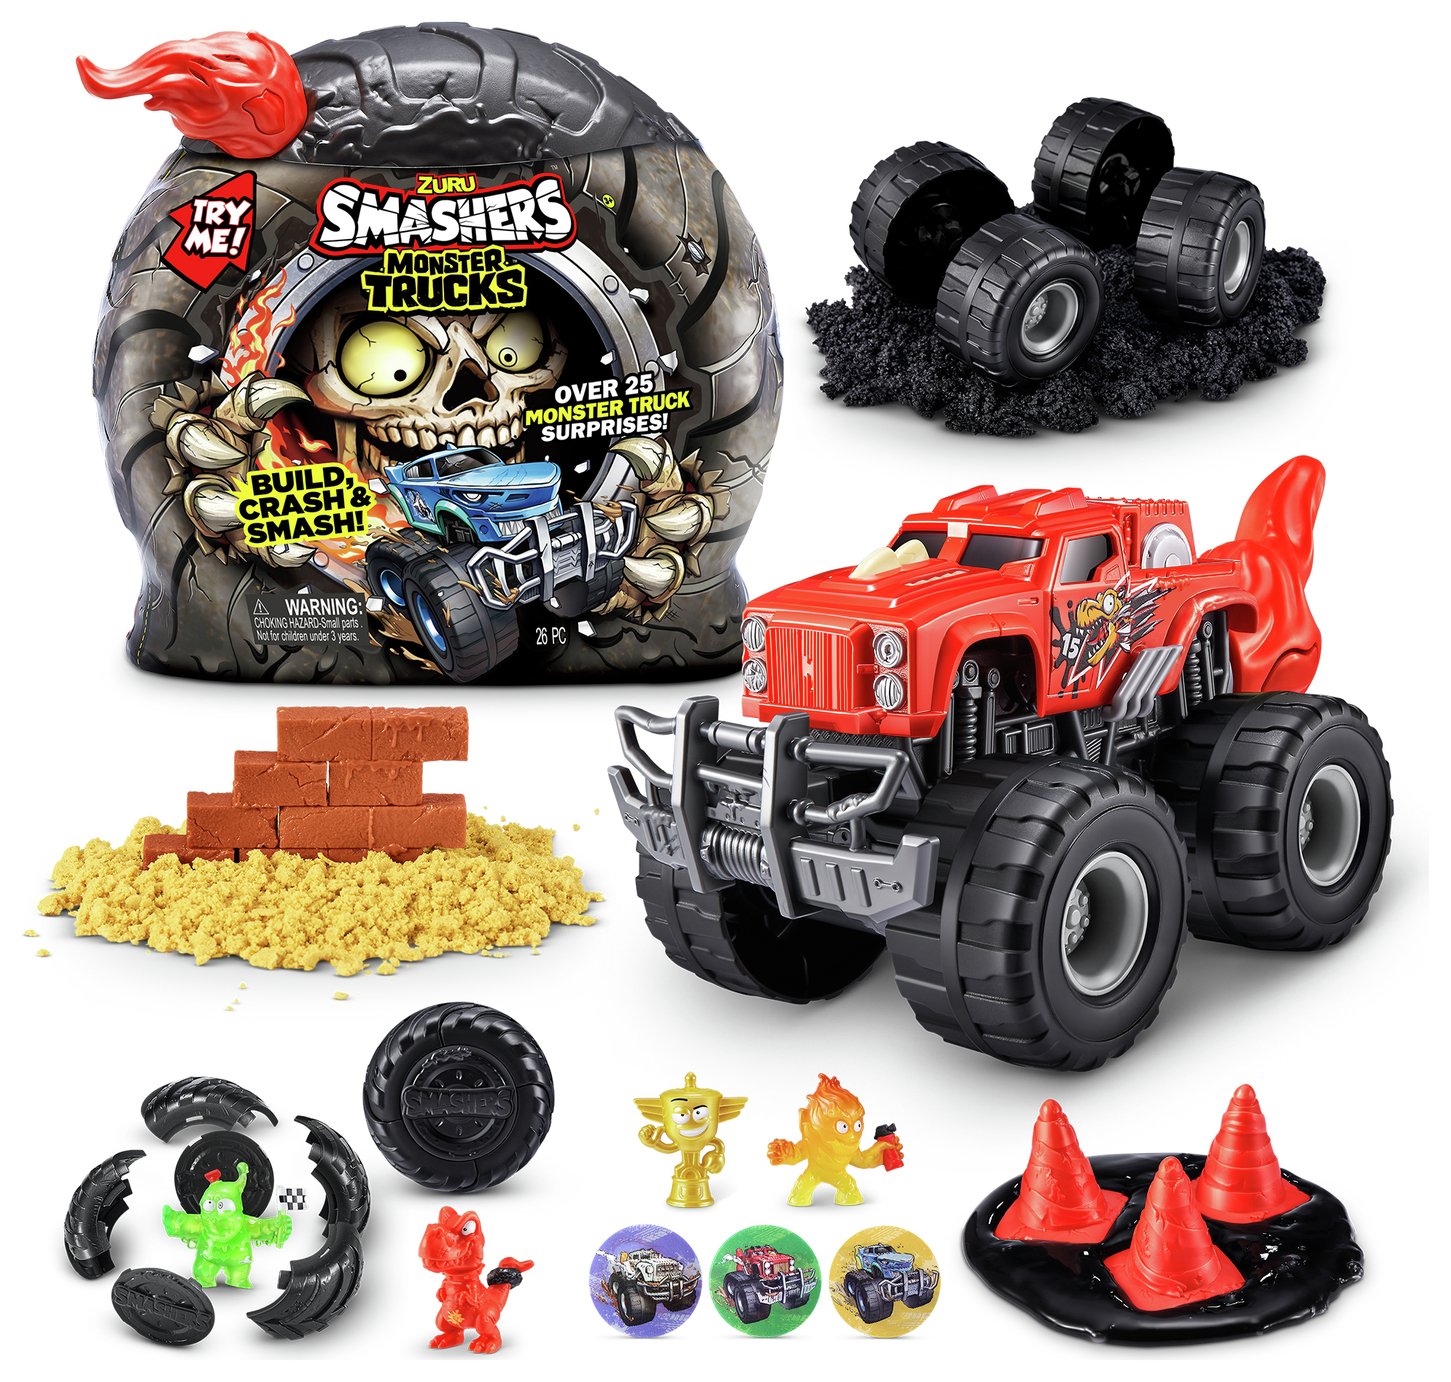 Zuru Smashers Surprise Monster Truck